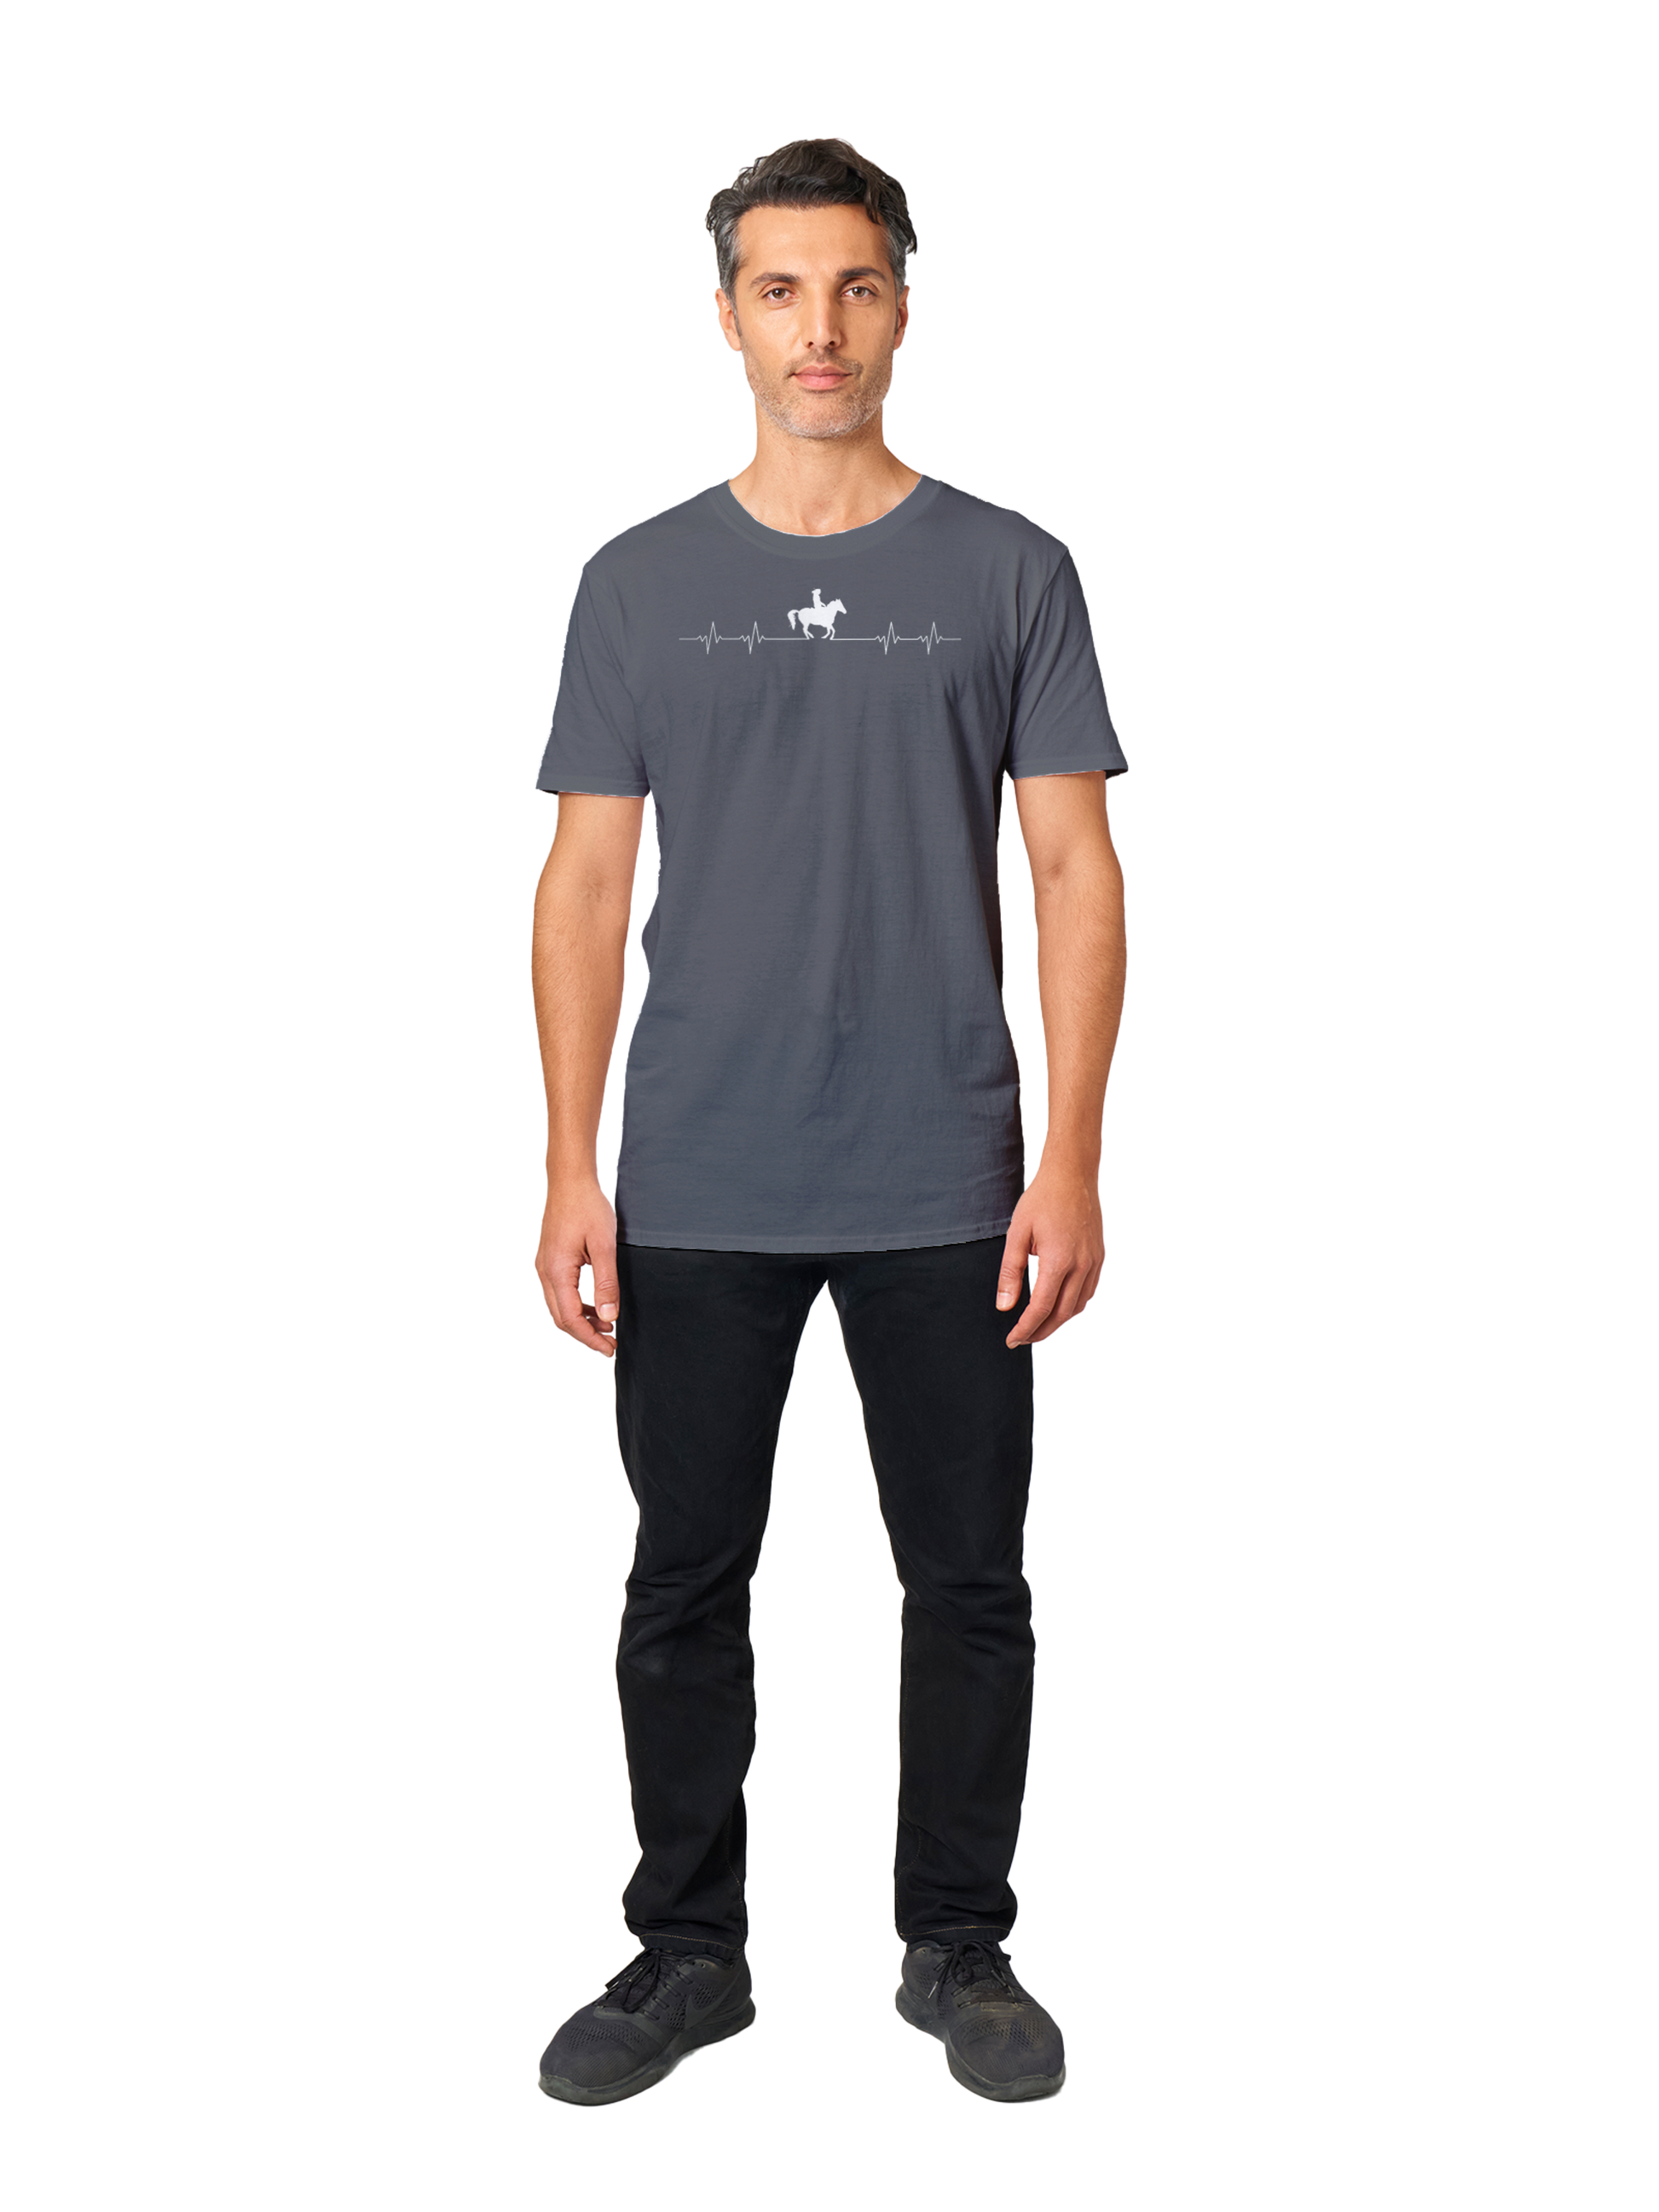 Hand Drawn Horse || Unisex Crewneck T-shirt - Design: "HEARTBEAT"; Static Design; Personalizable Back Text